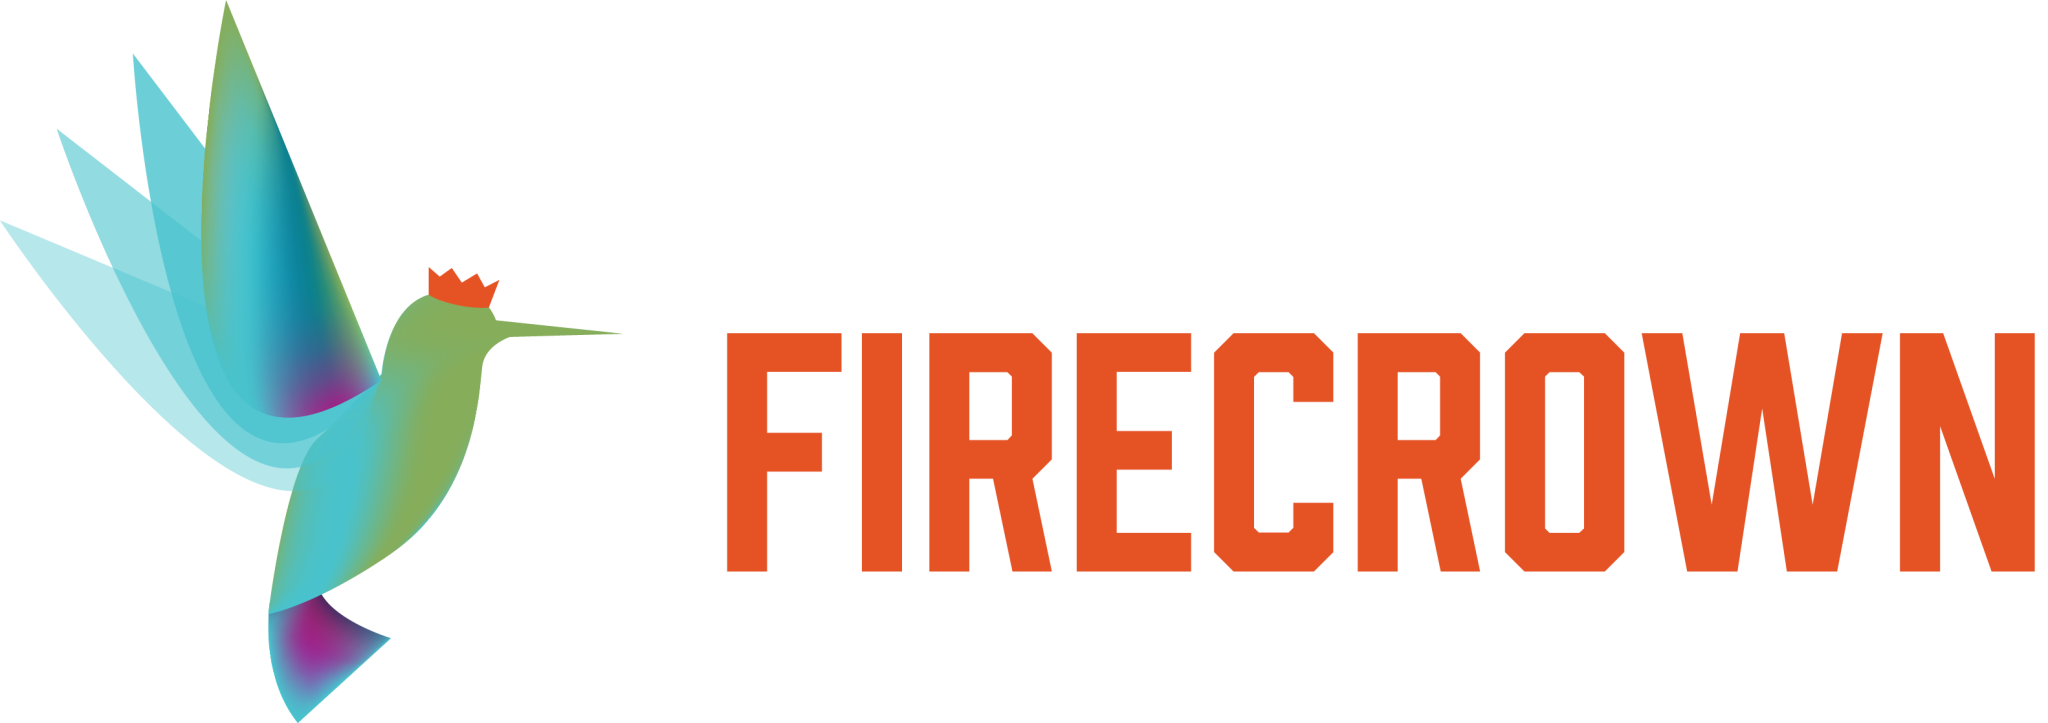 Firecrown Logo